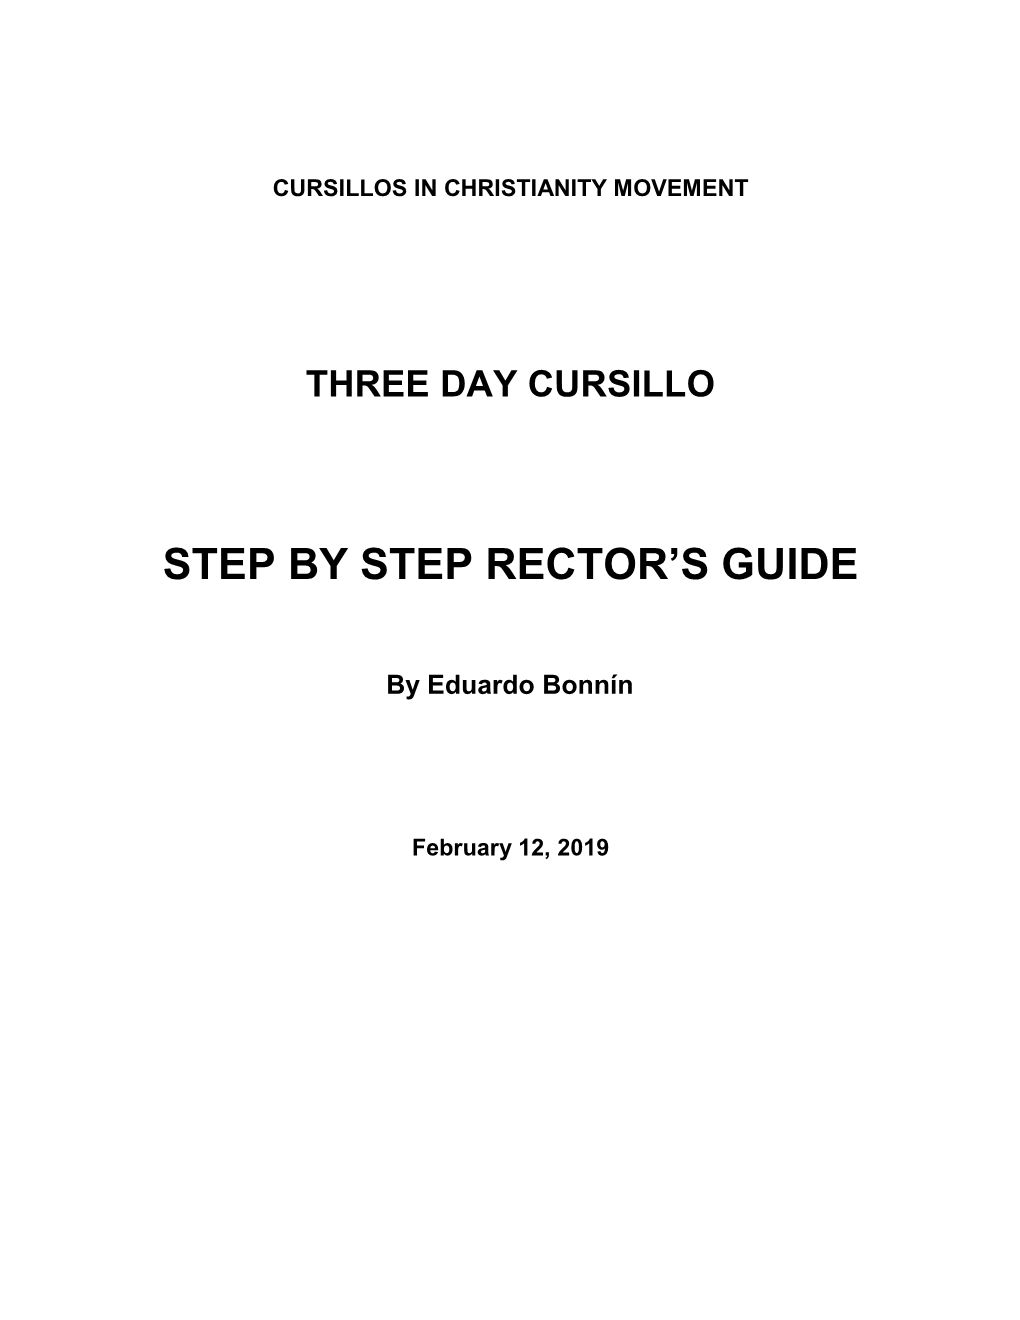 The Three Day Manual